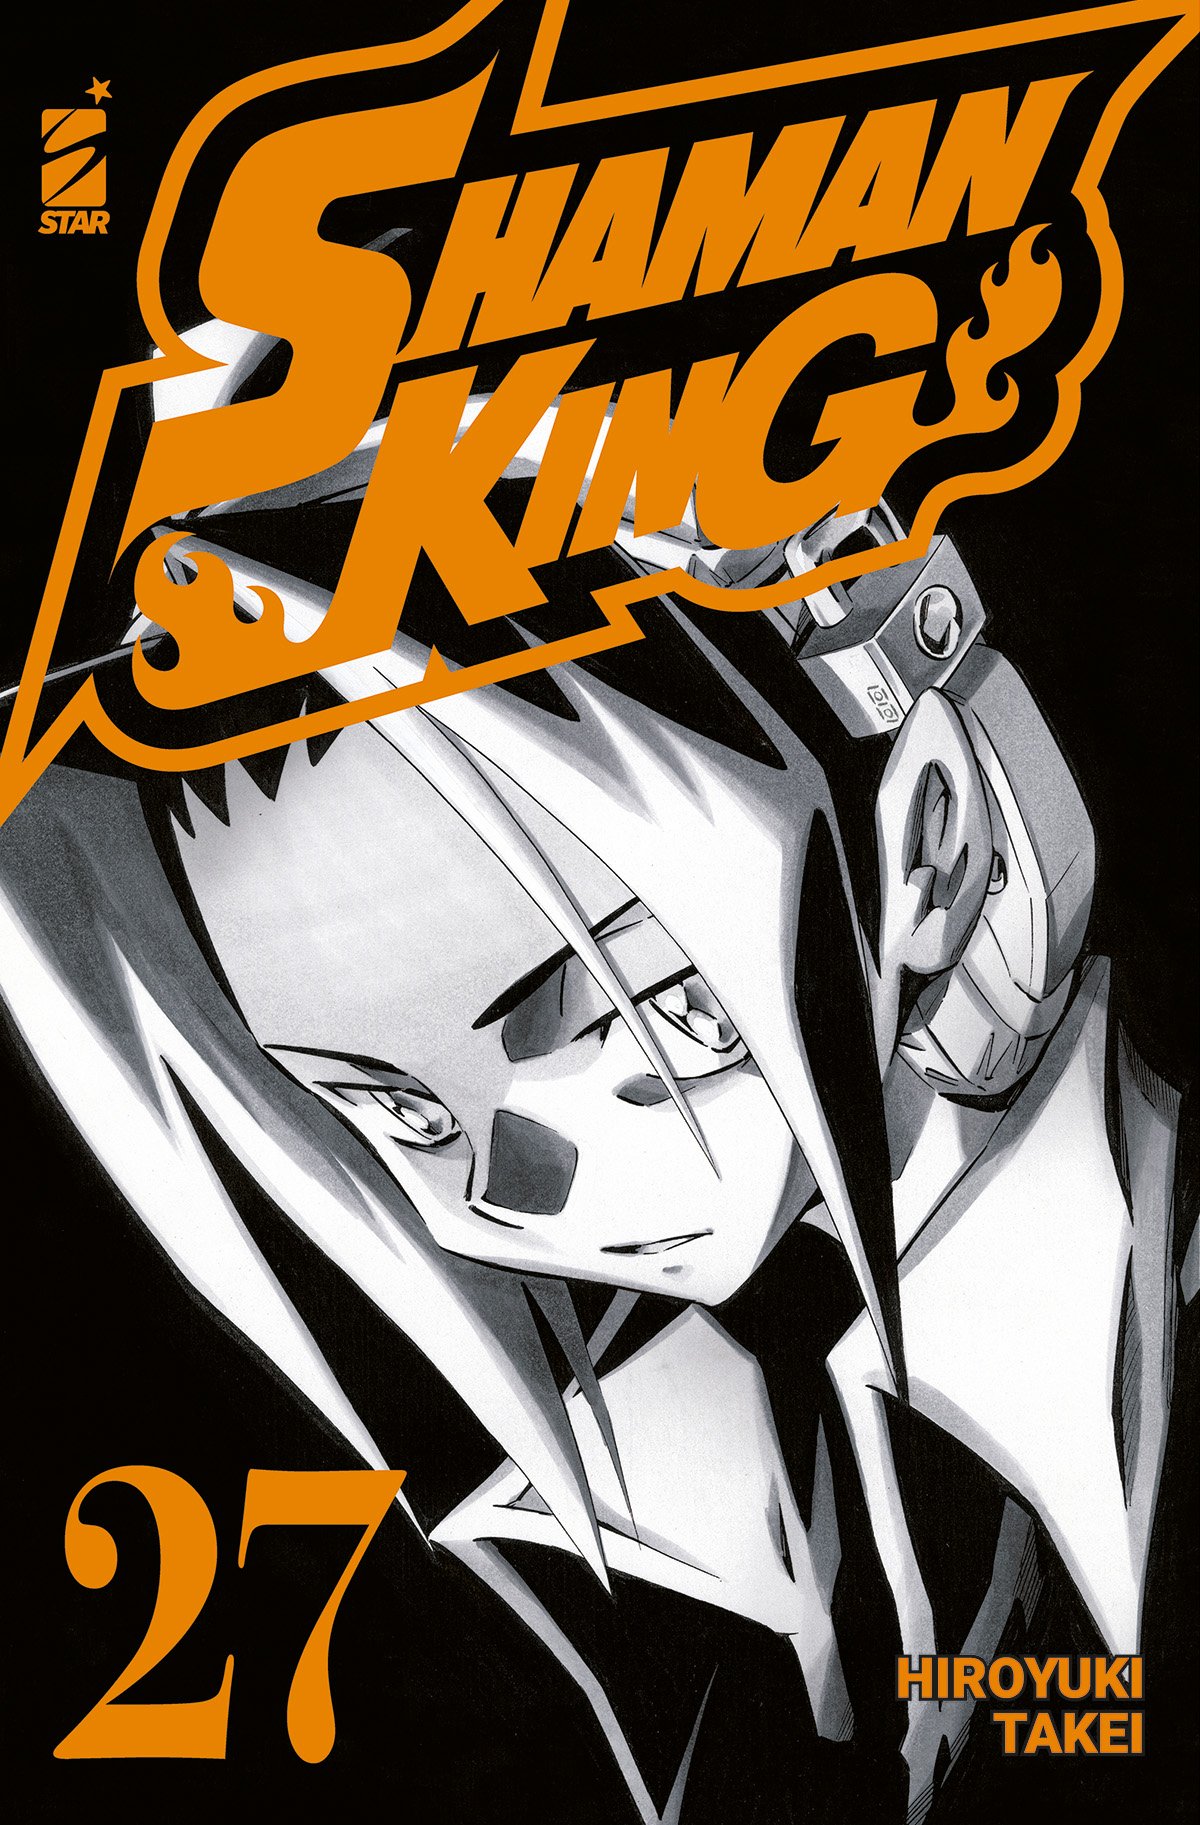 Shaman King Final Edition 27, tra le uscite manga Star Comics del 4 Maggio 2022